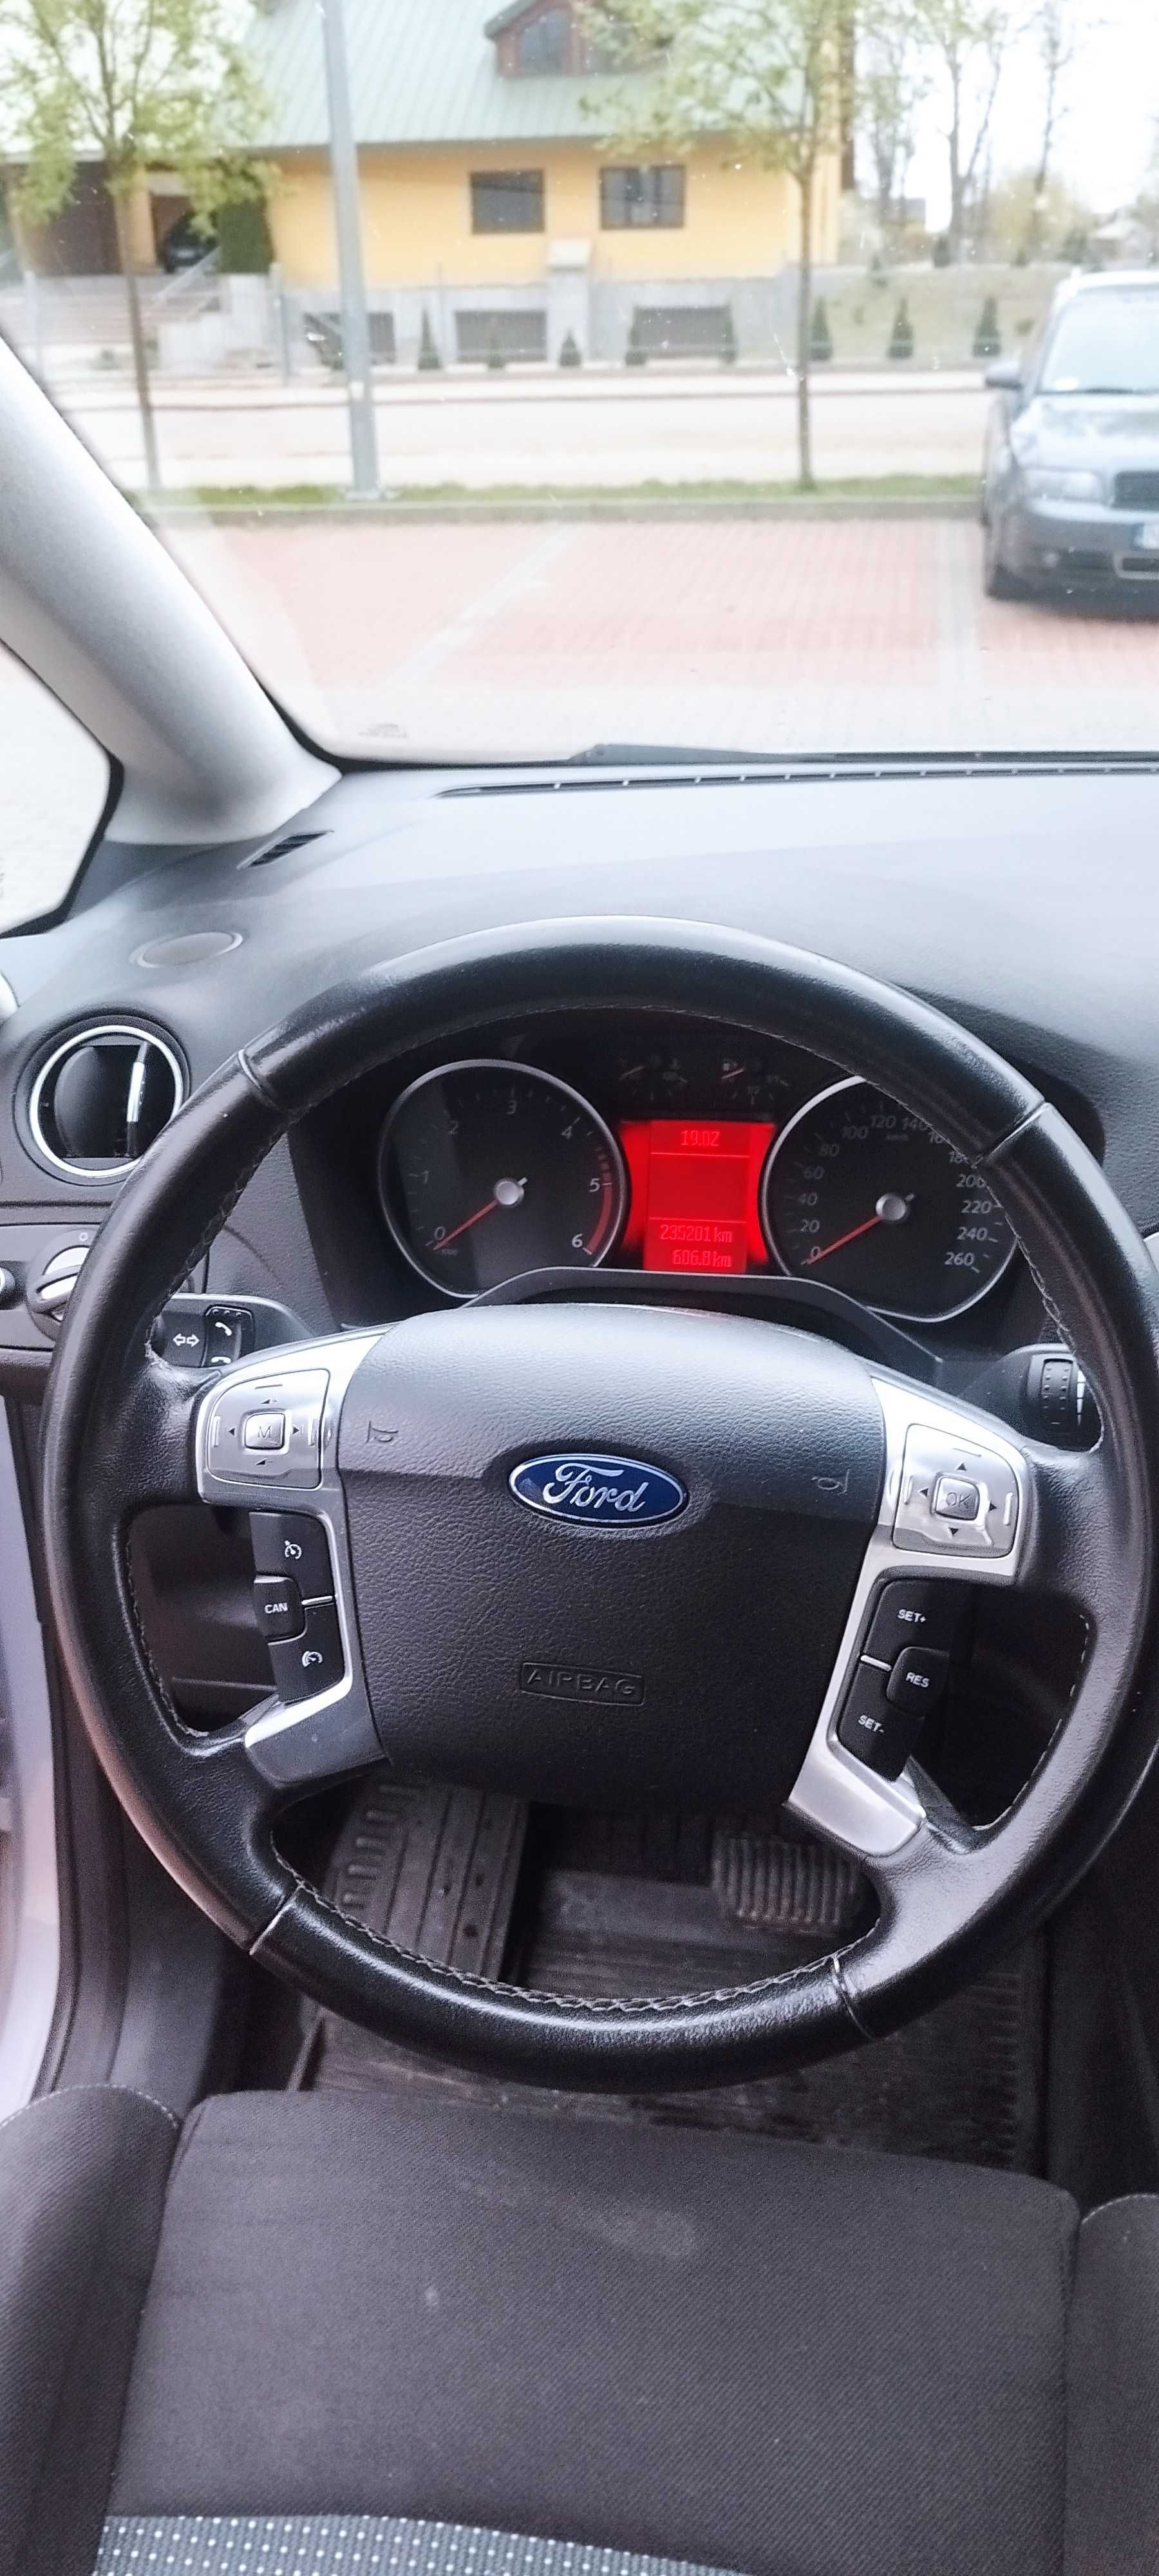 Ford S-Max Polift 2.0 diesel 140km